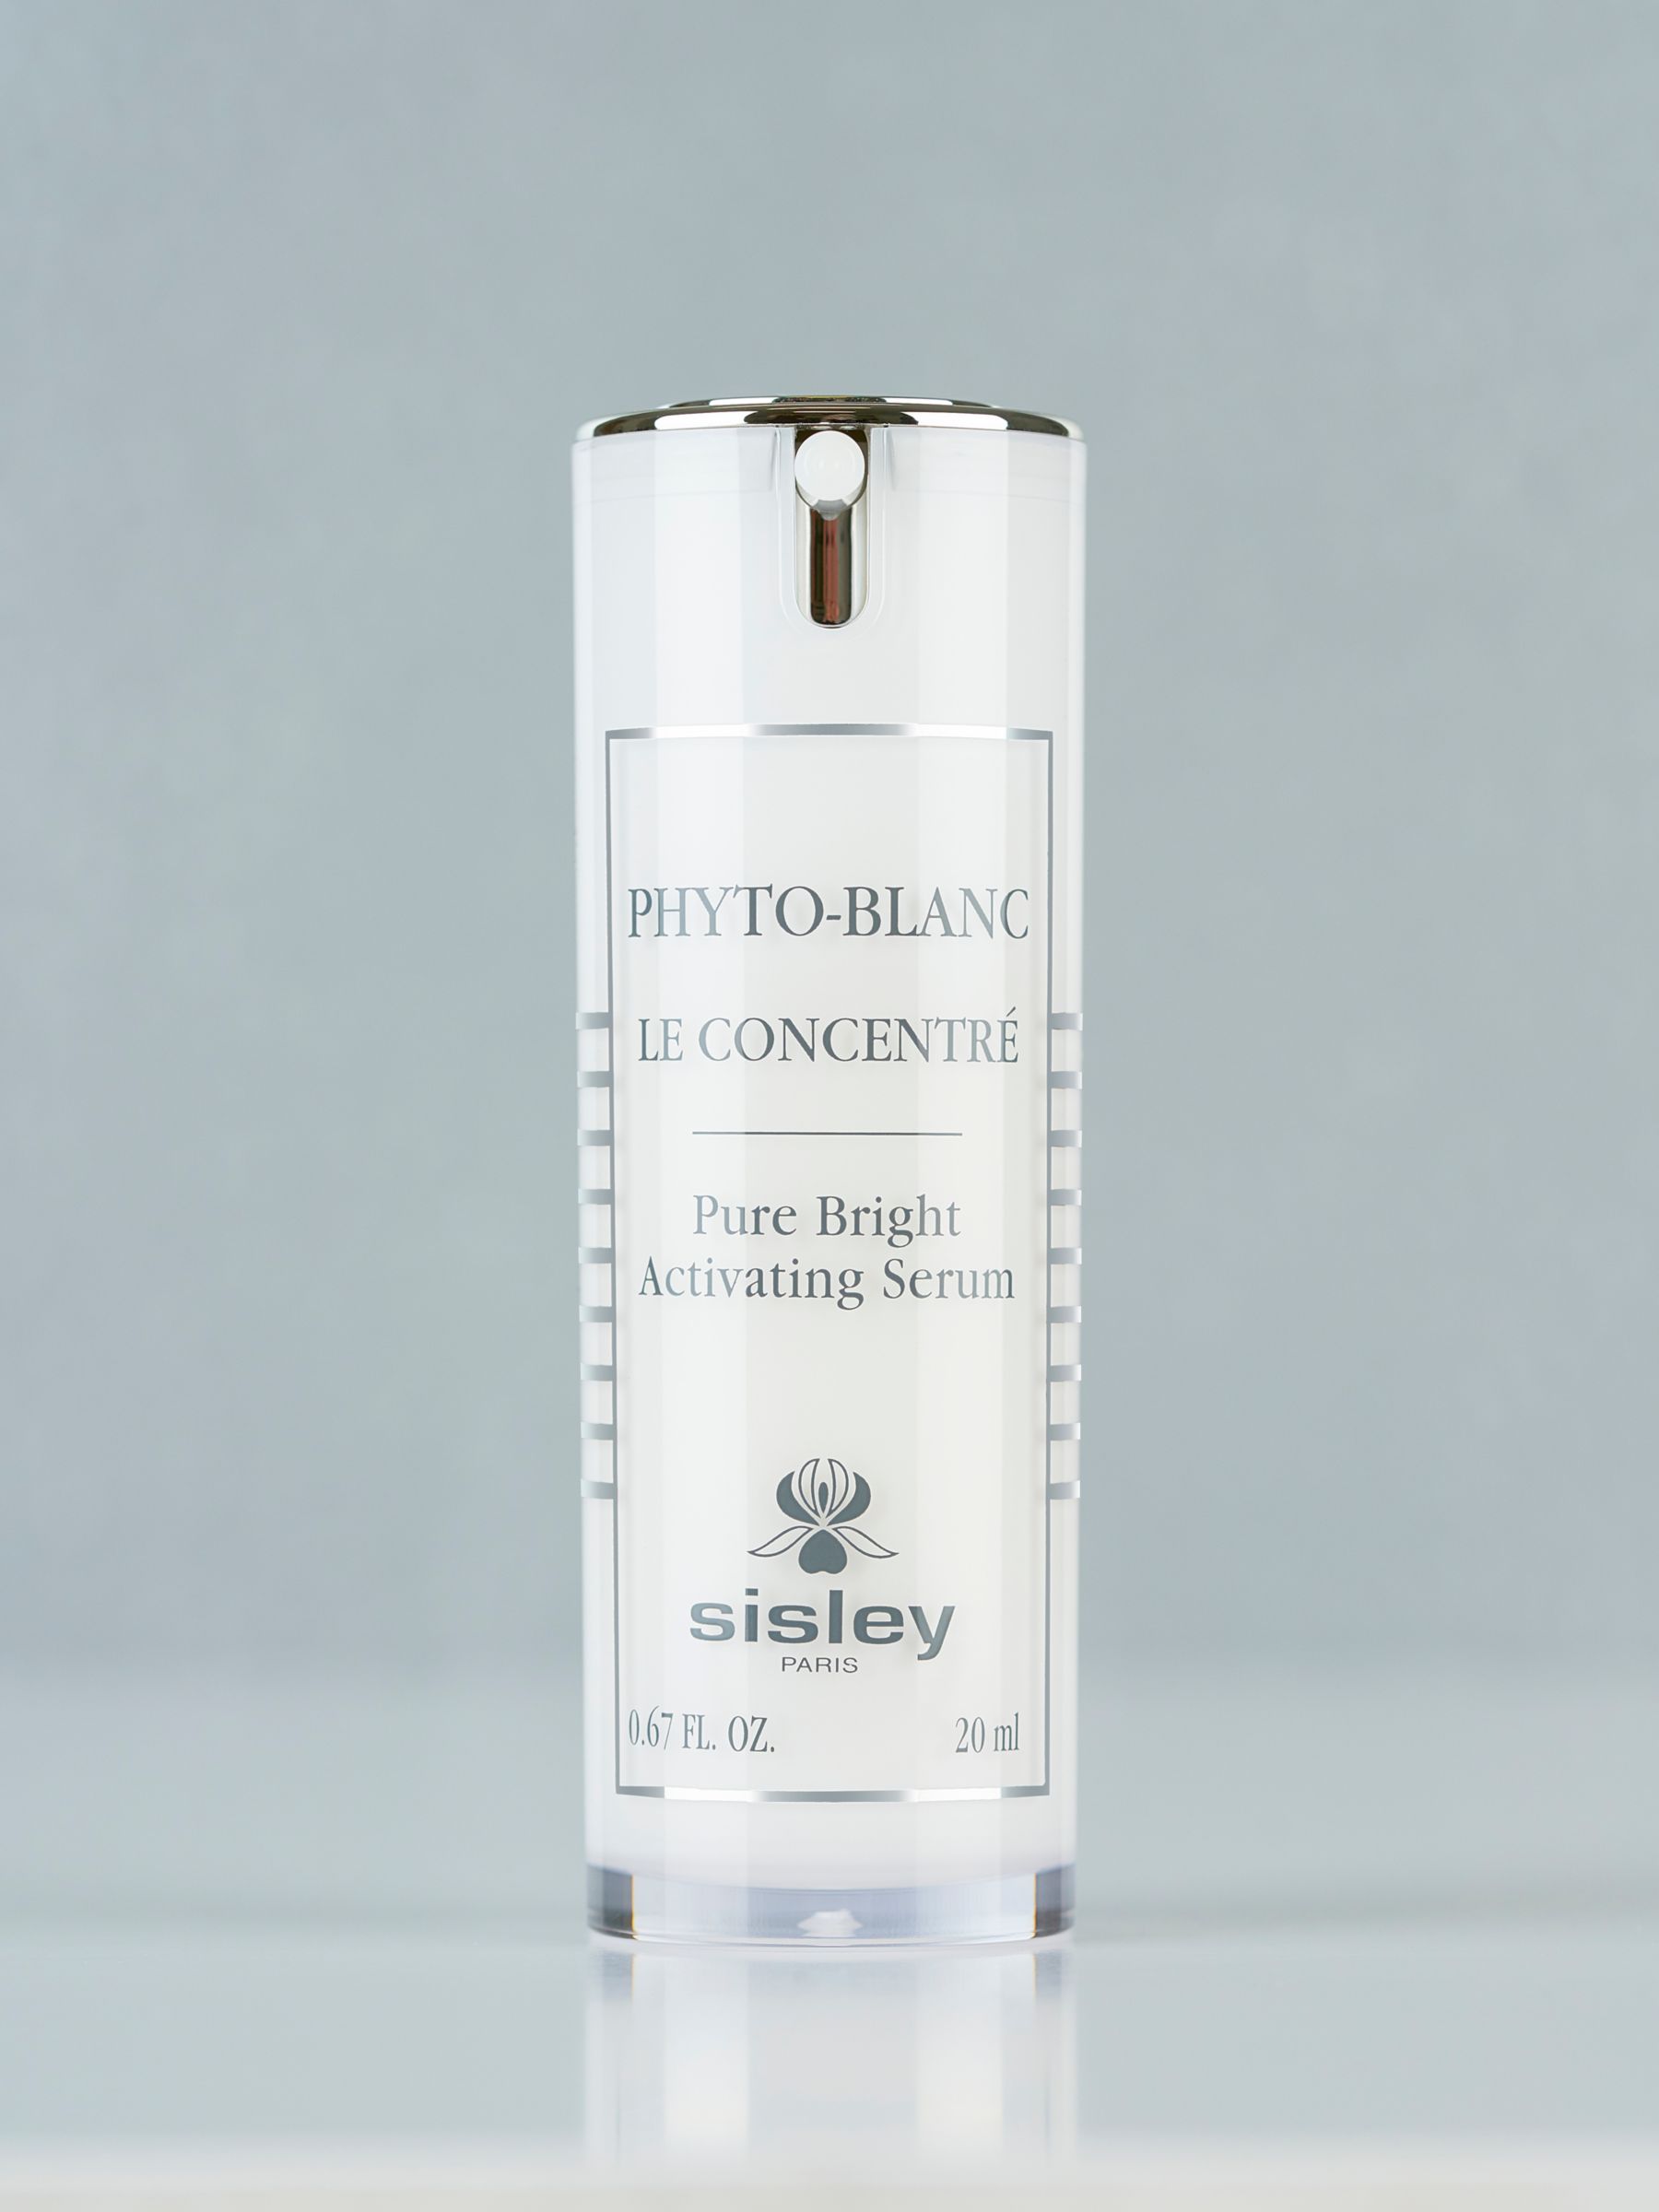 Sisley-Paris Phyto Blanc Le Concentré Pure Bright Activating Serum, 20ml 4